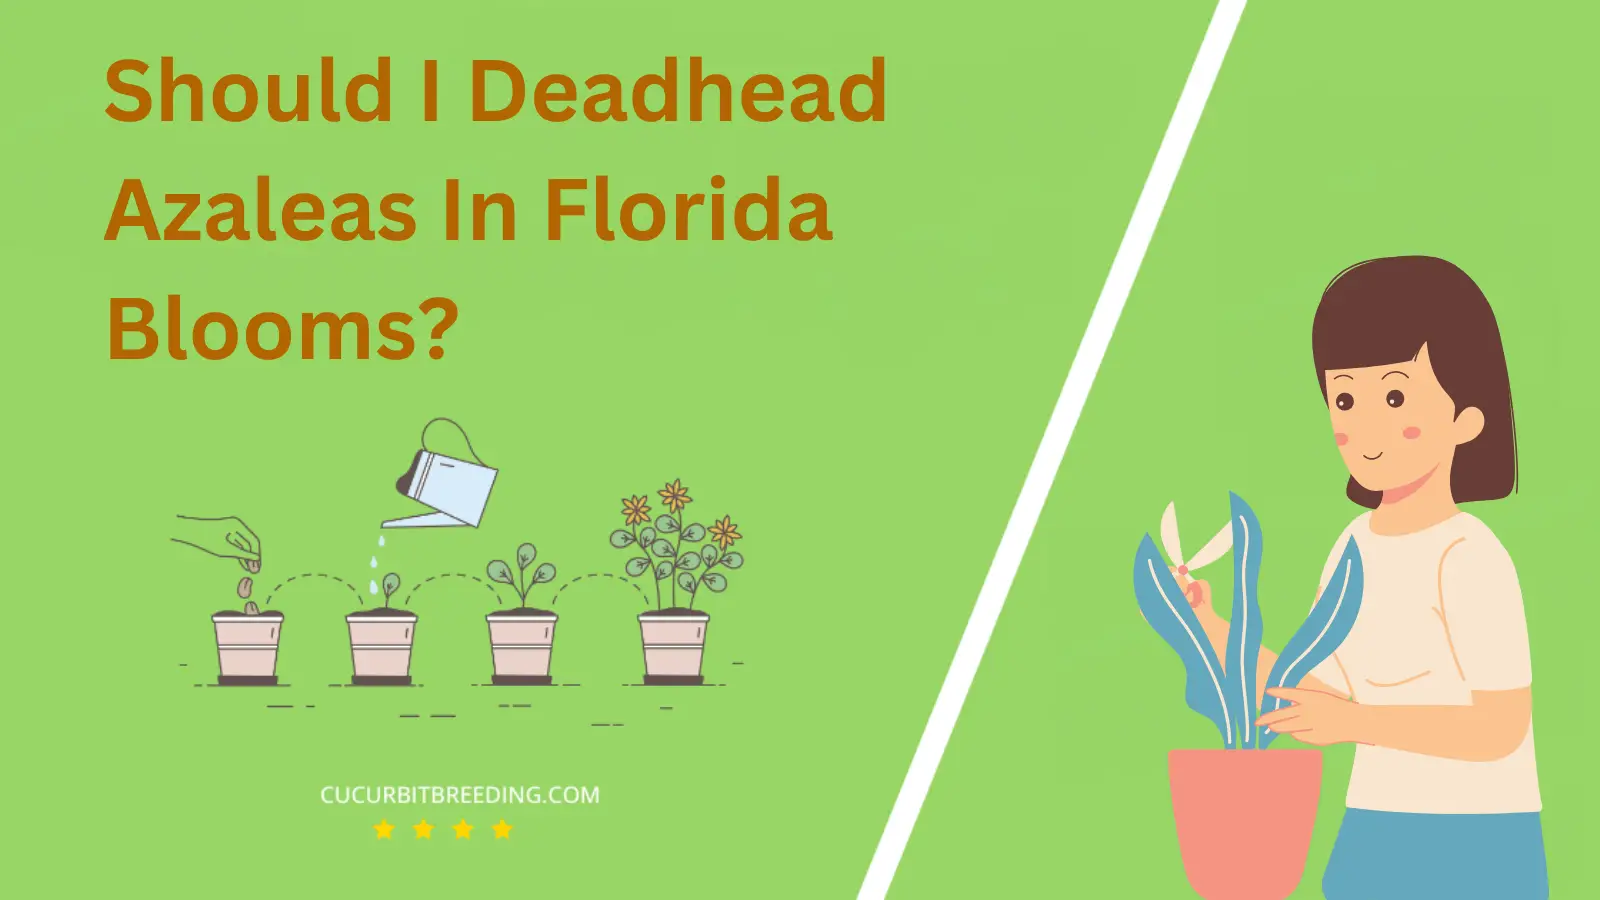 Should I Deadhead Azaleas In Florida Blooms?